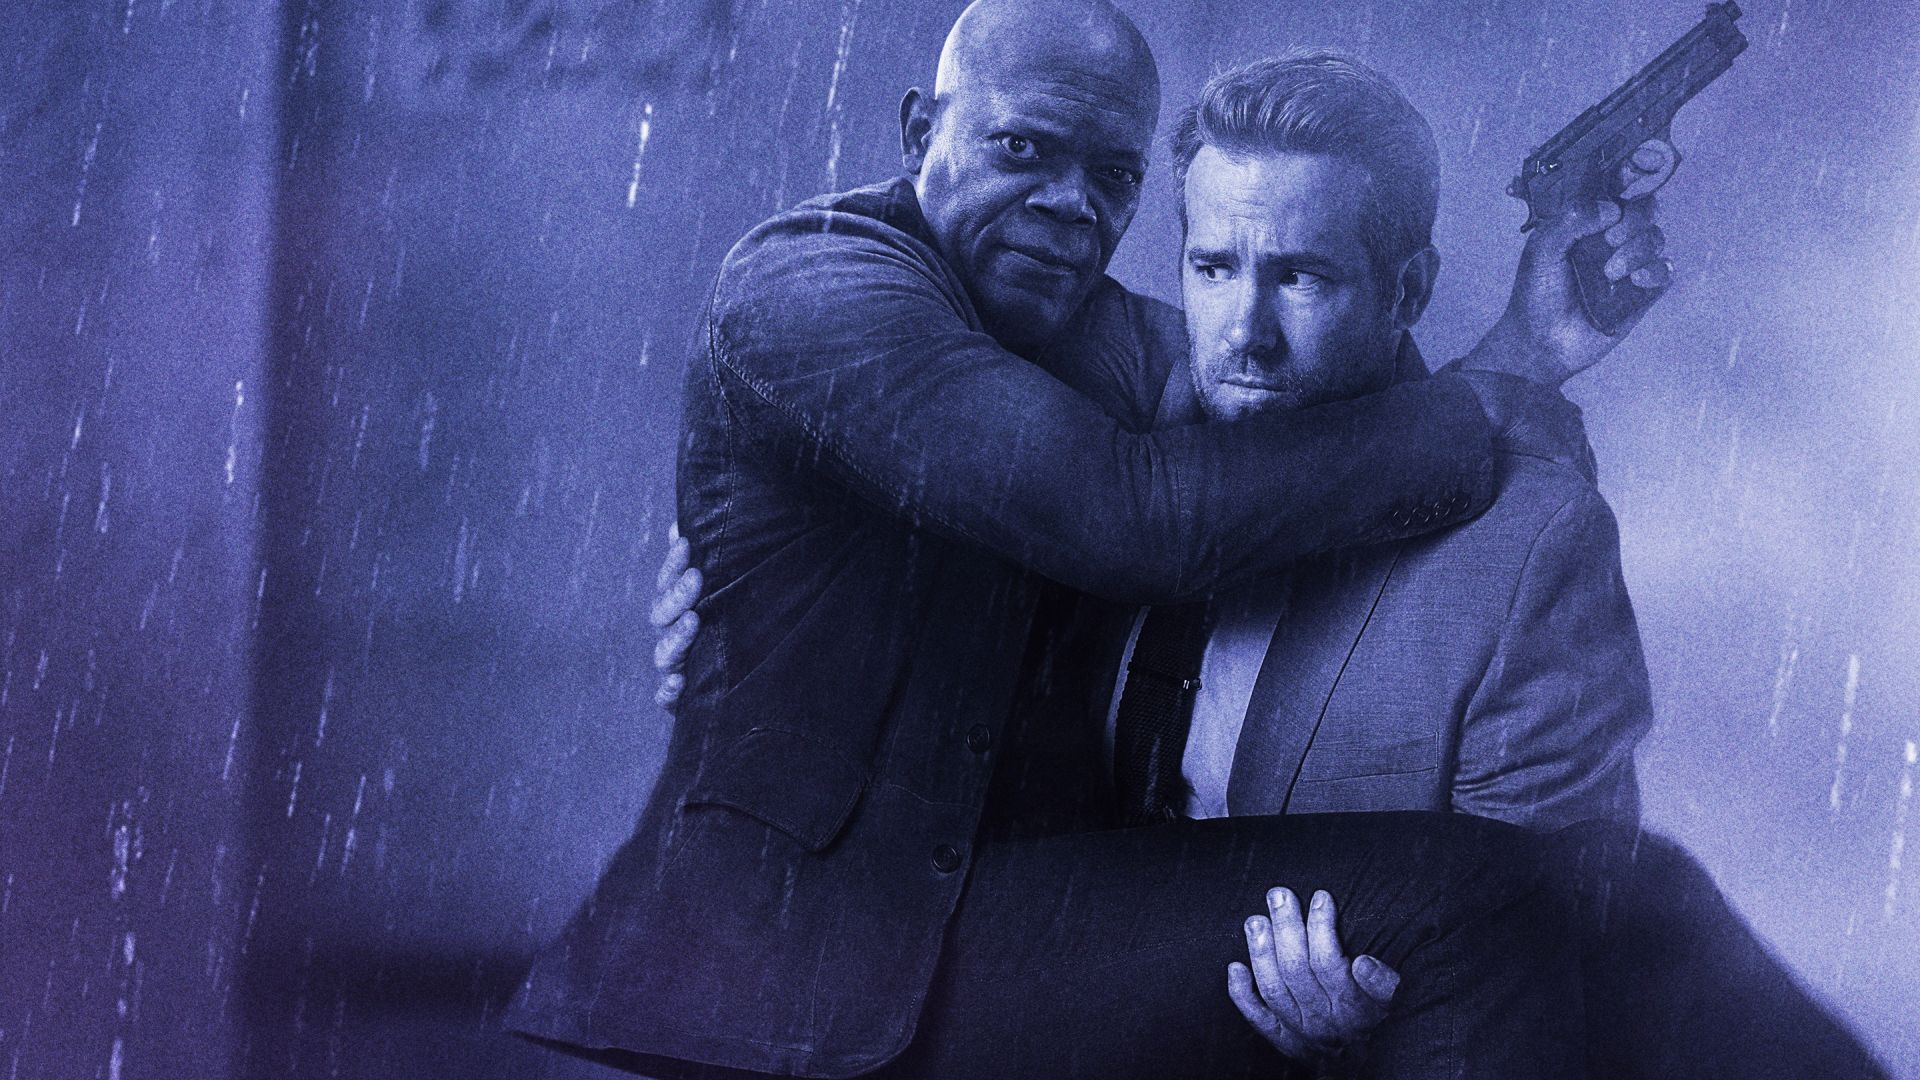 Wallpaper Samuel L. Jackson, Ryan Reynolds, The Hitman's Bodyguard, 2017 movie, poster, rain